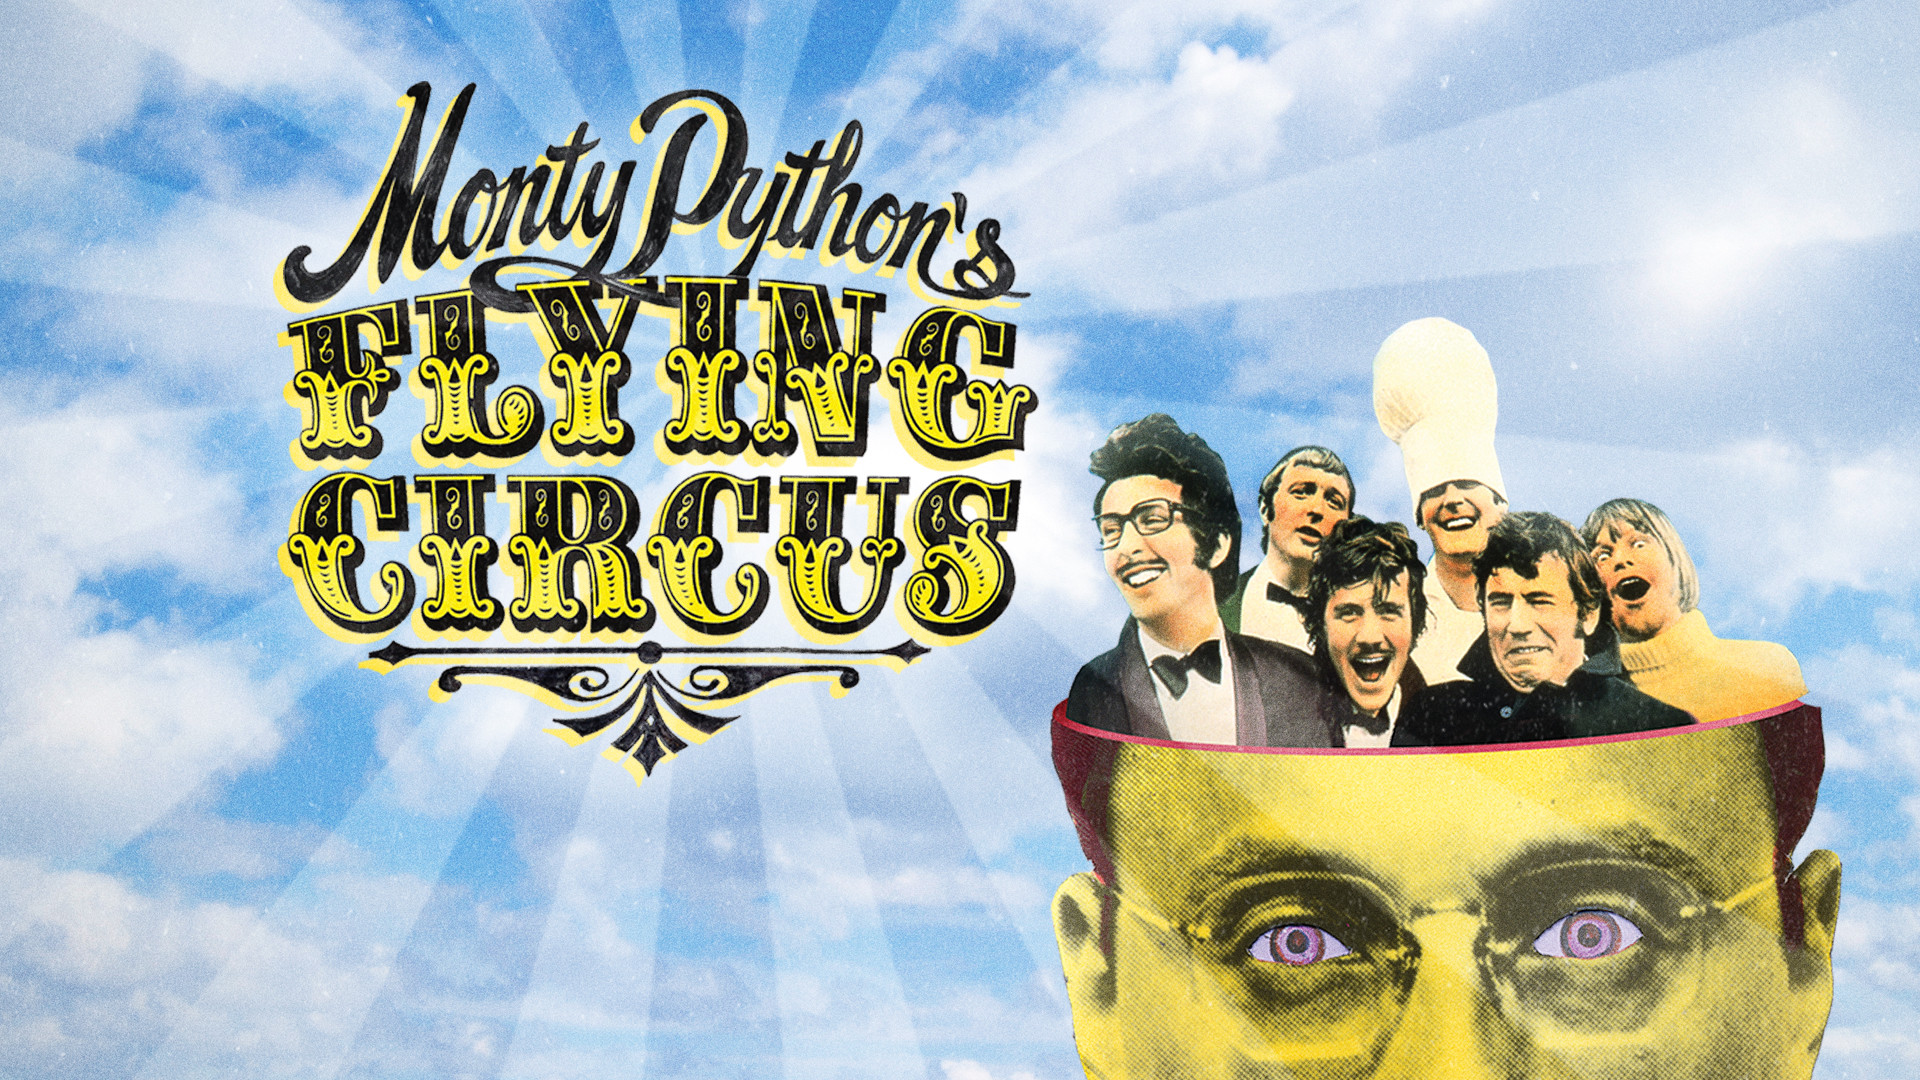 Coffret Flying Circus DVD